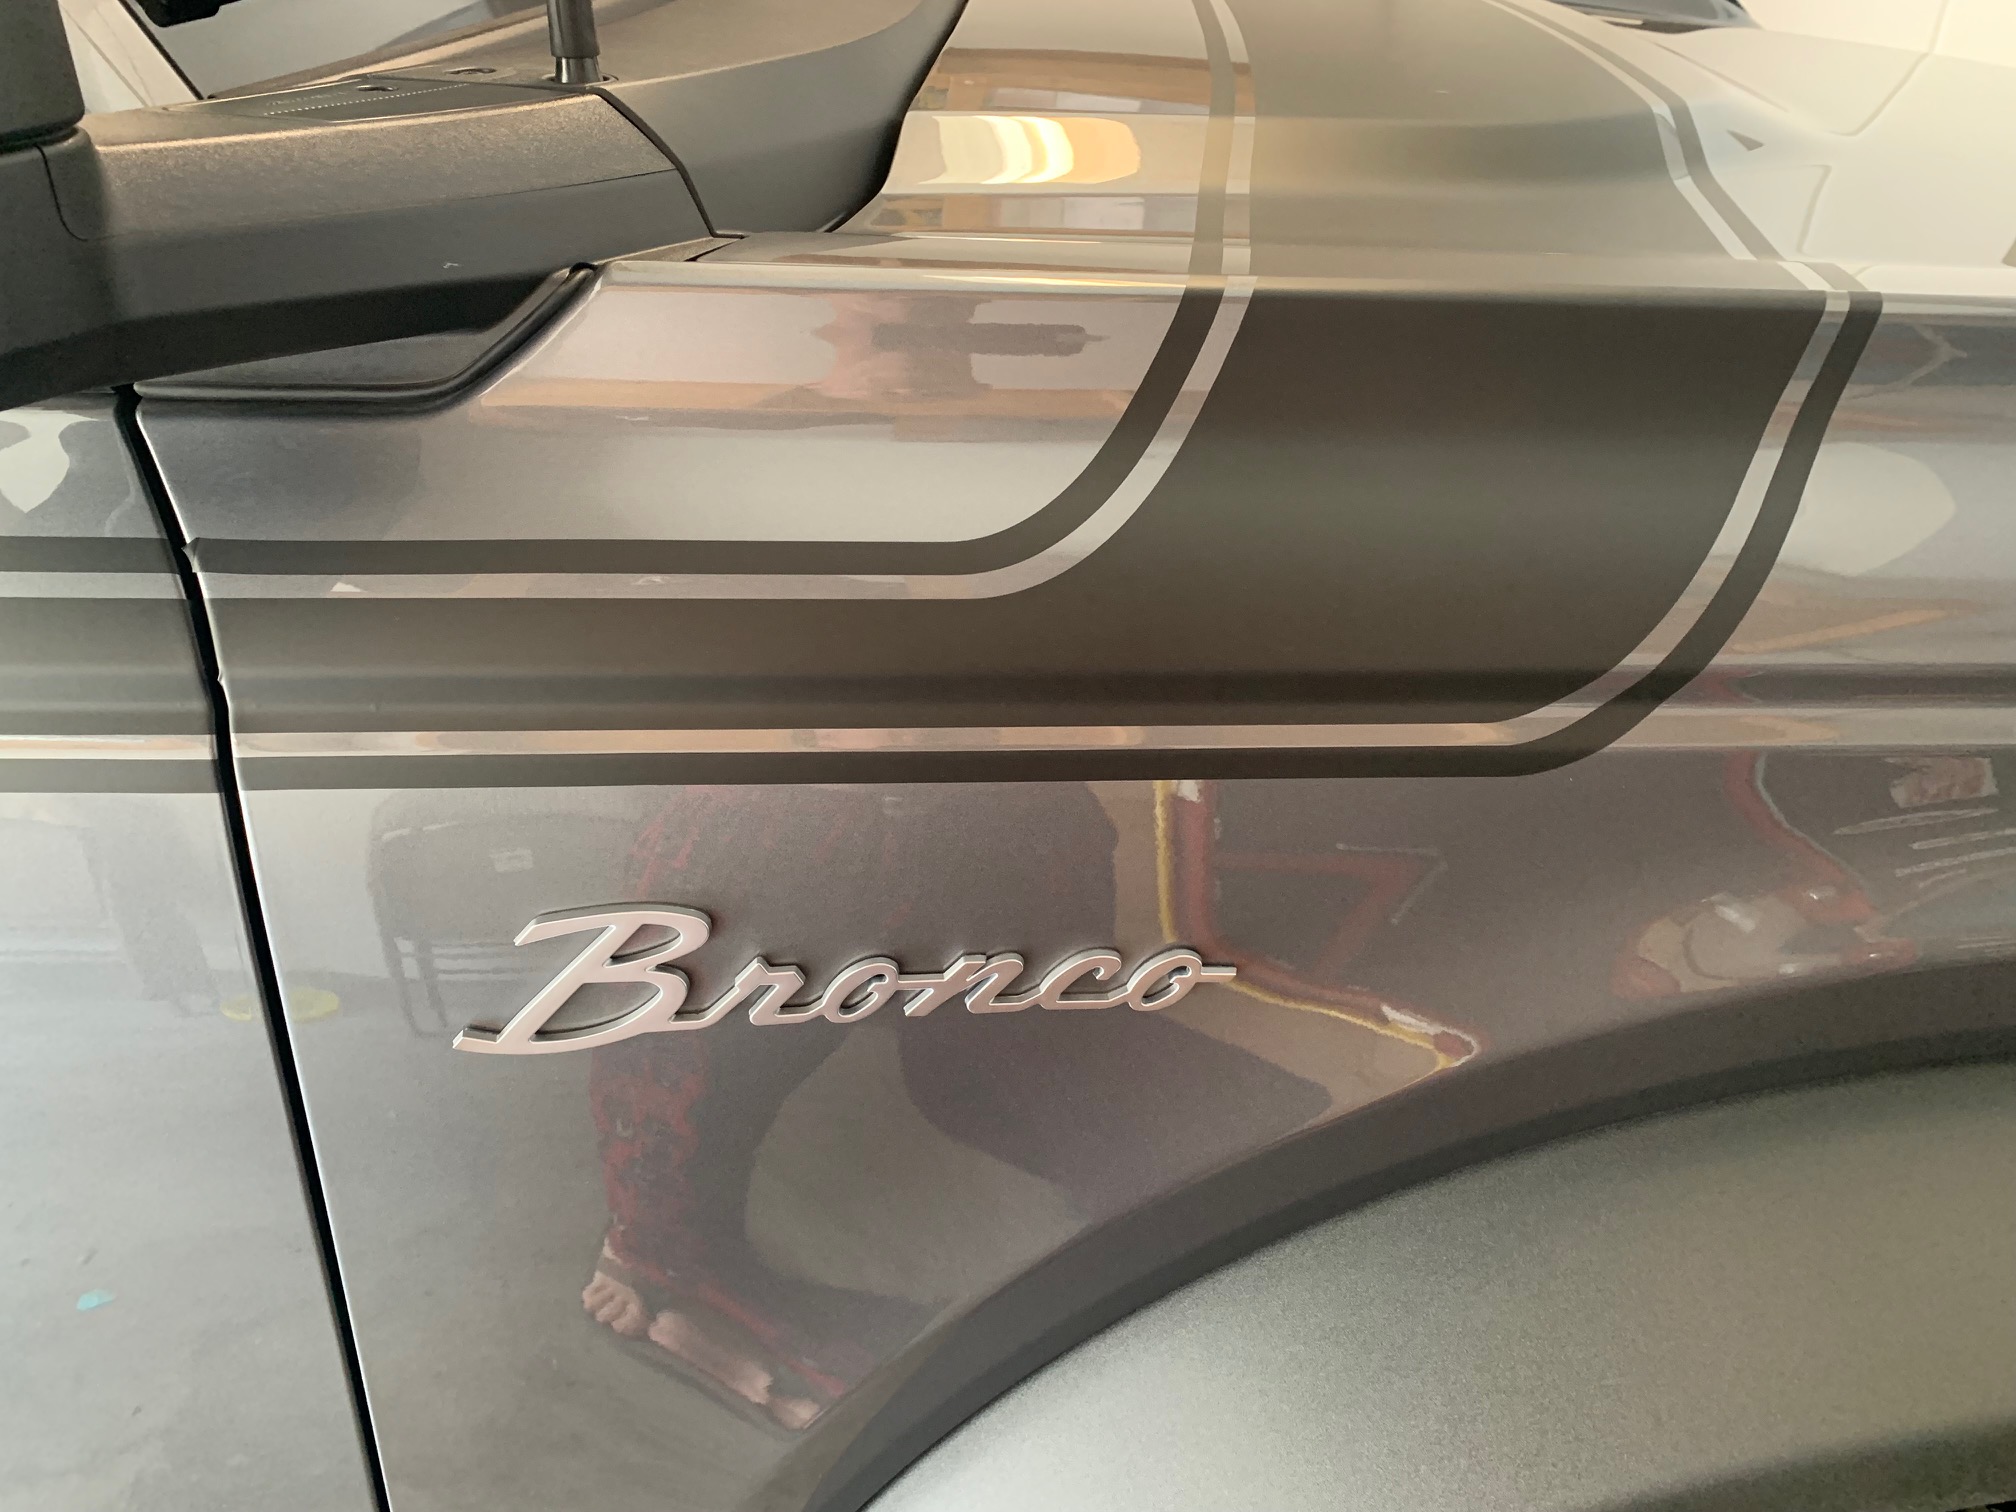 Ford Bronco Guys, why the heck does everyone debadge their trim emblems? BroncoEmblem